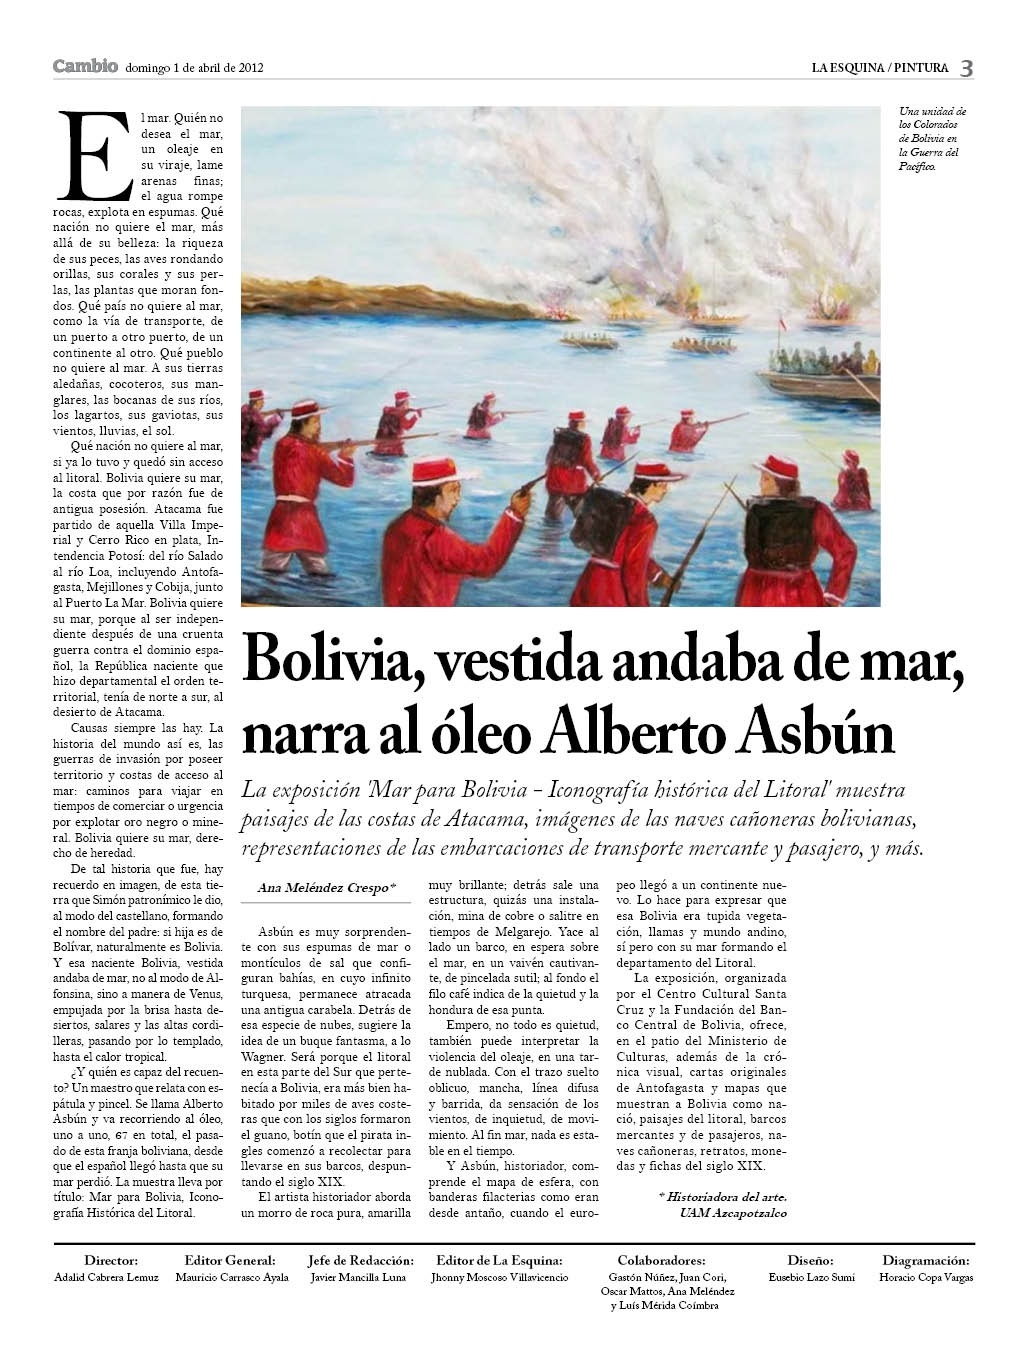 Bolivia, vestida andaba de mar, narra el oleo Alberto Ausbún